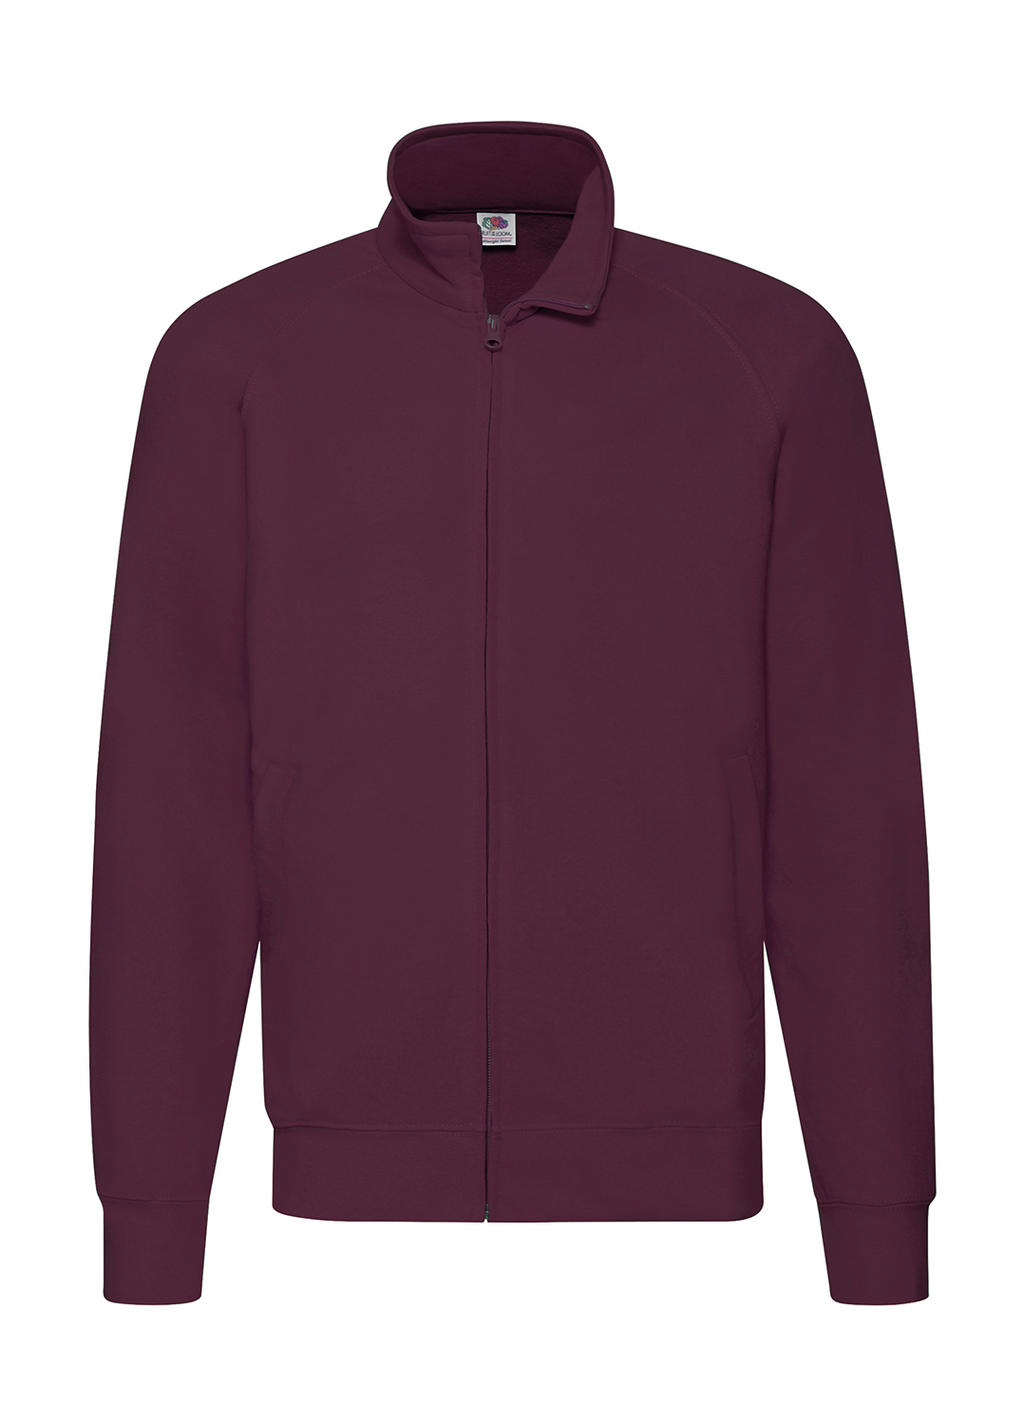  Lightweight Sweat Jacket in Farbe Burgundy